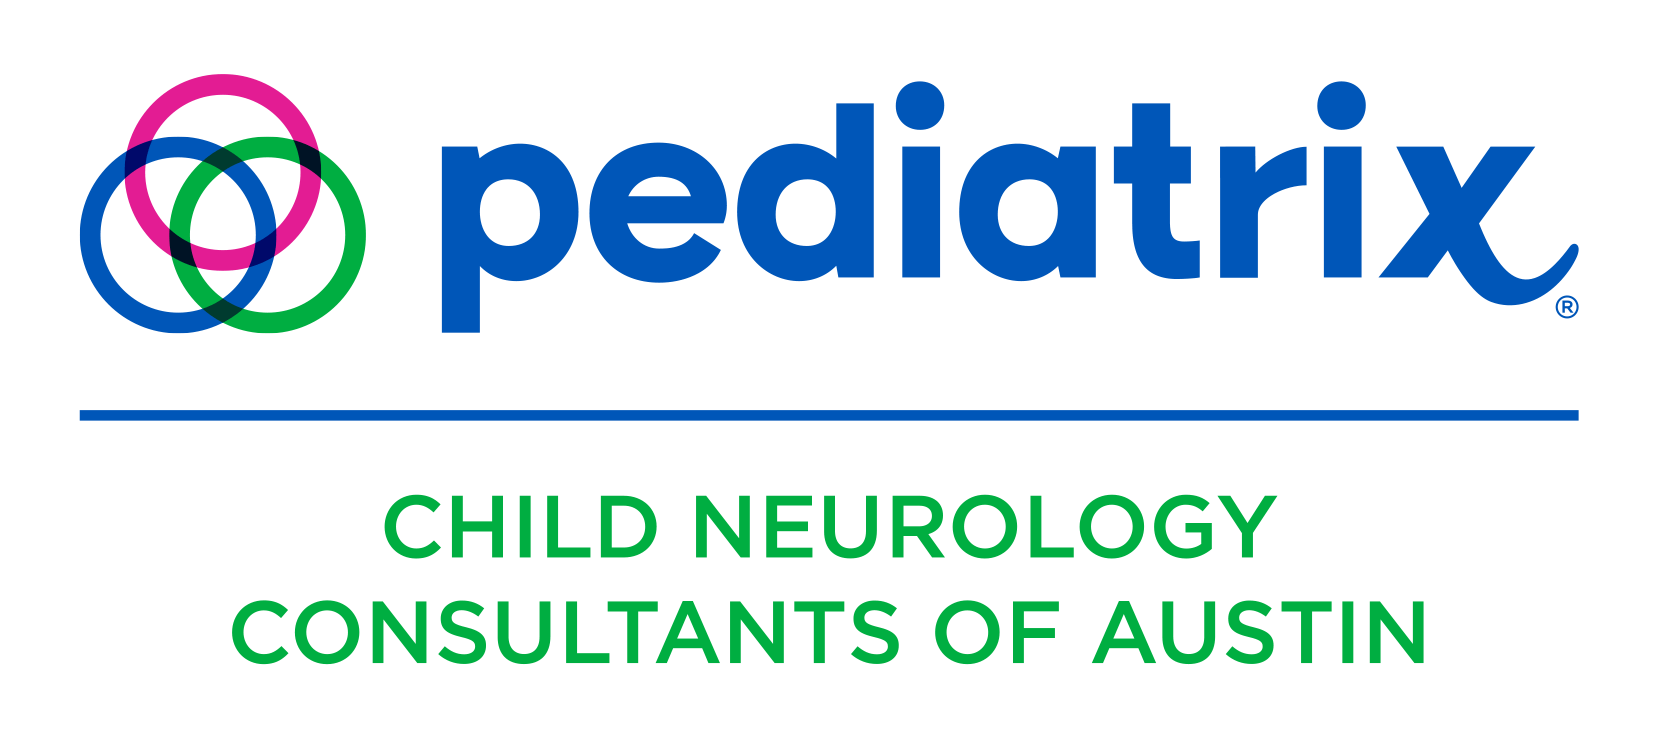 Children Neurology Consultants of Austin